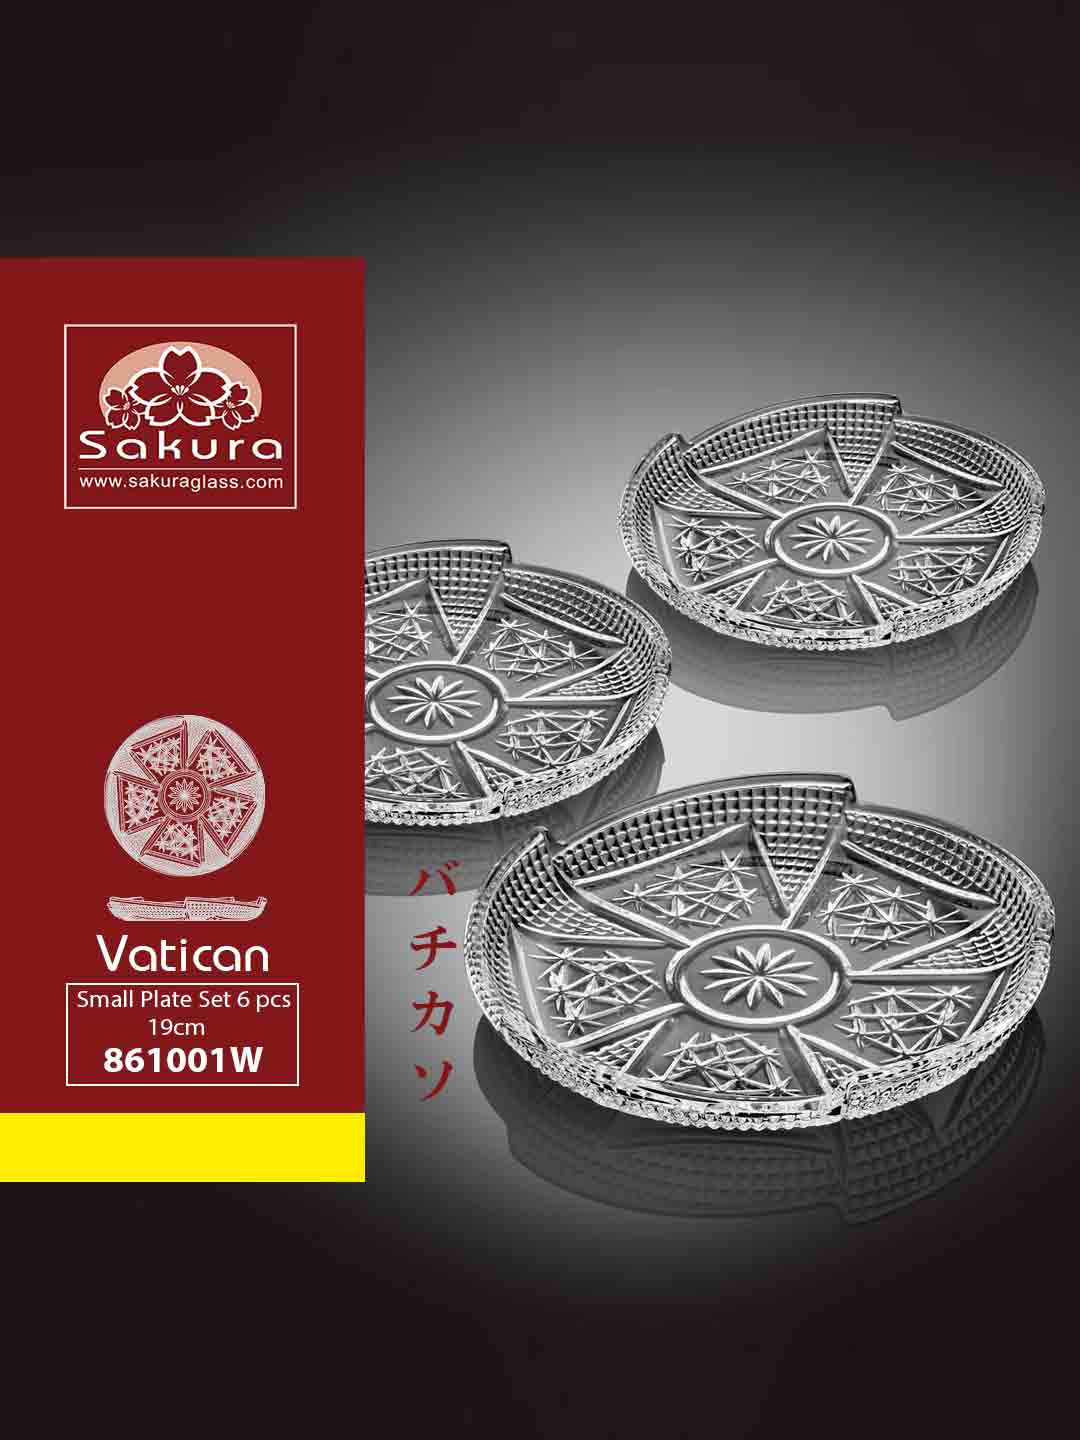 Sakura Product Vatican Small Plate Set 6 pcs 19cm 861001W